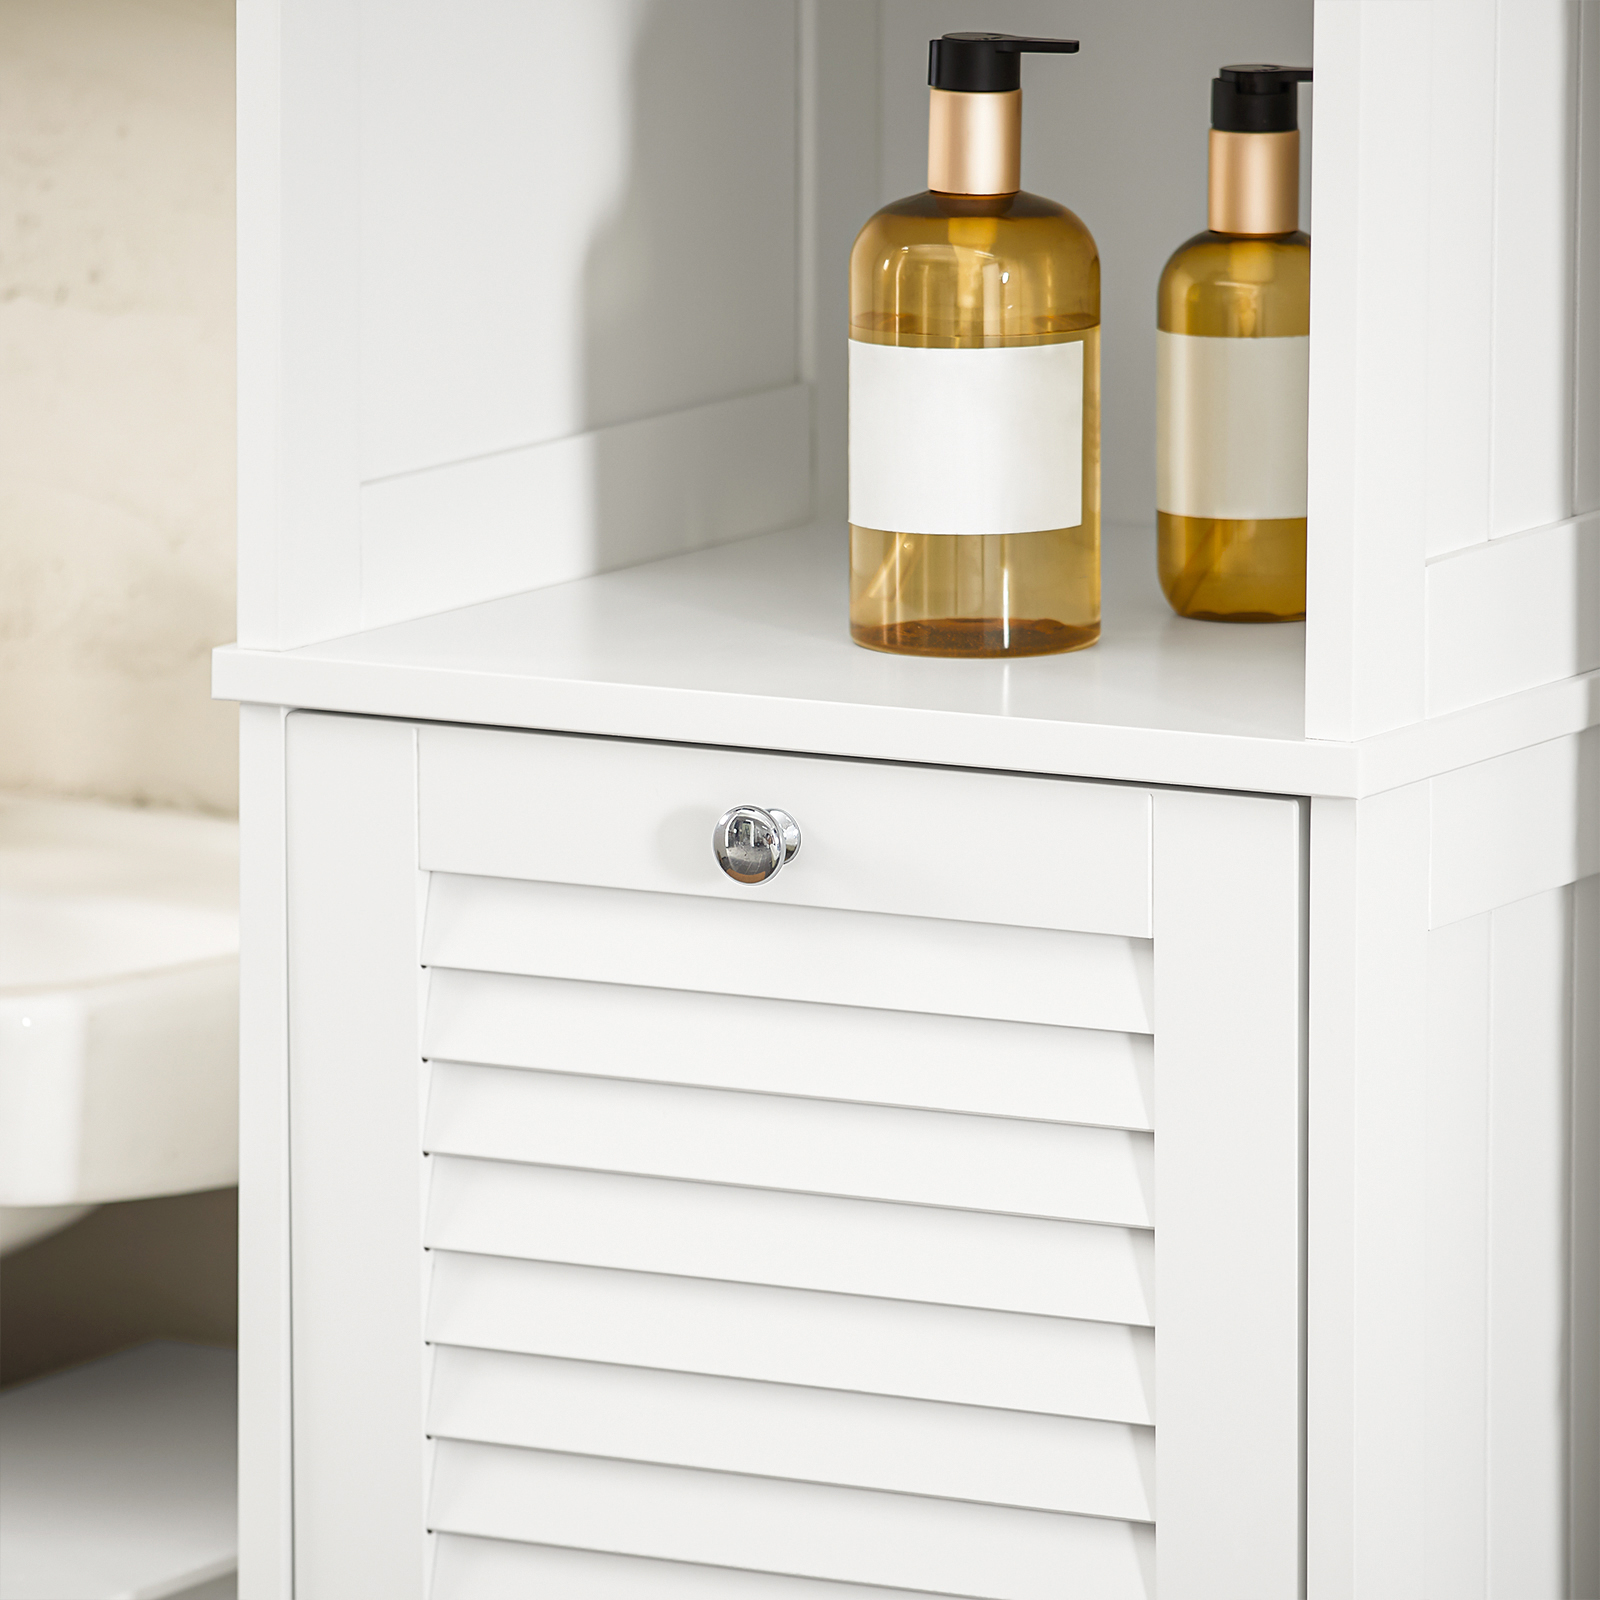 SoBuy BZR124-W Bathroom Tall Cabinet Cupboard Storage Cabinet With Laundry Basket